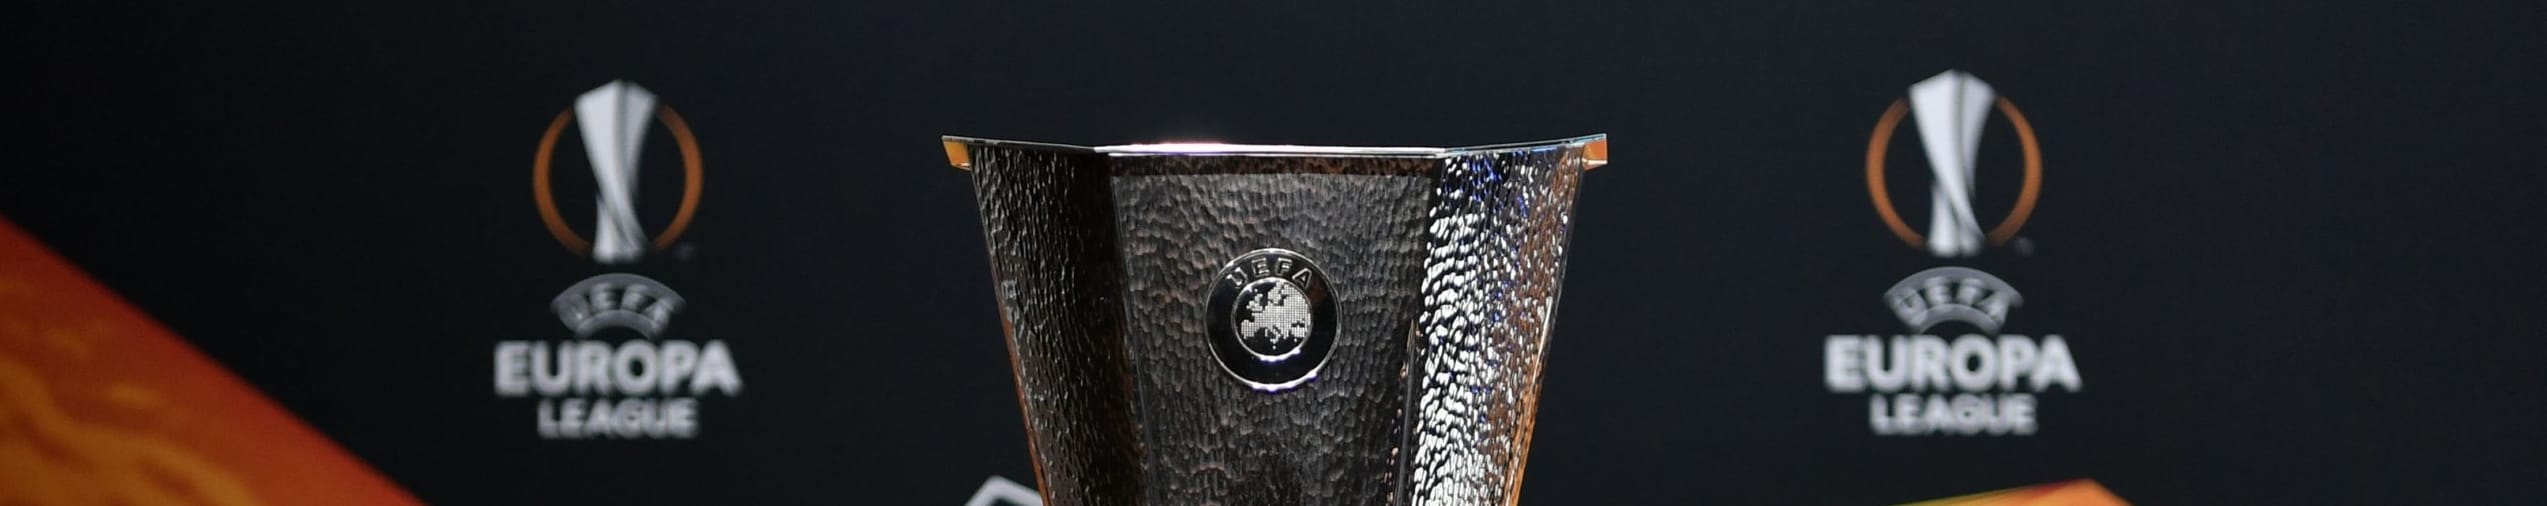 Europa League 2020-21: Οι όμιλοι του ΠΑΟΚ και της ΑΕΚ!